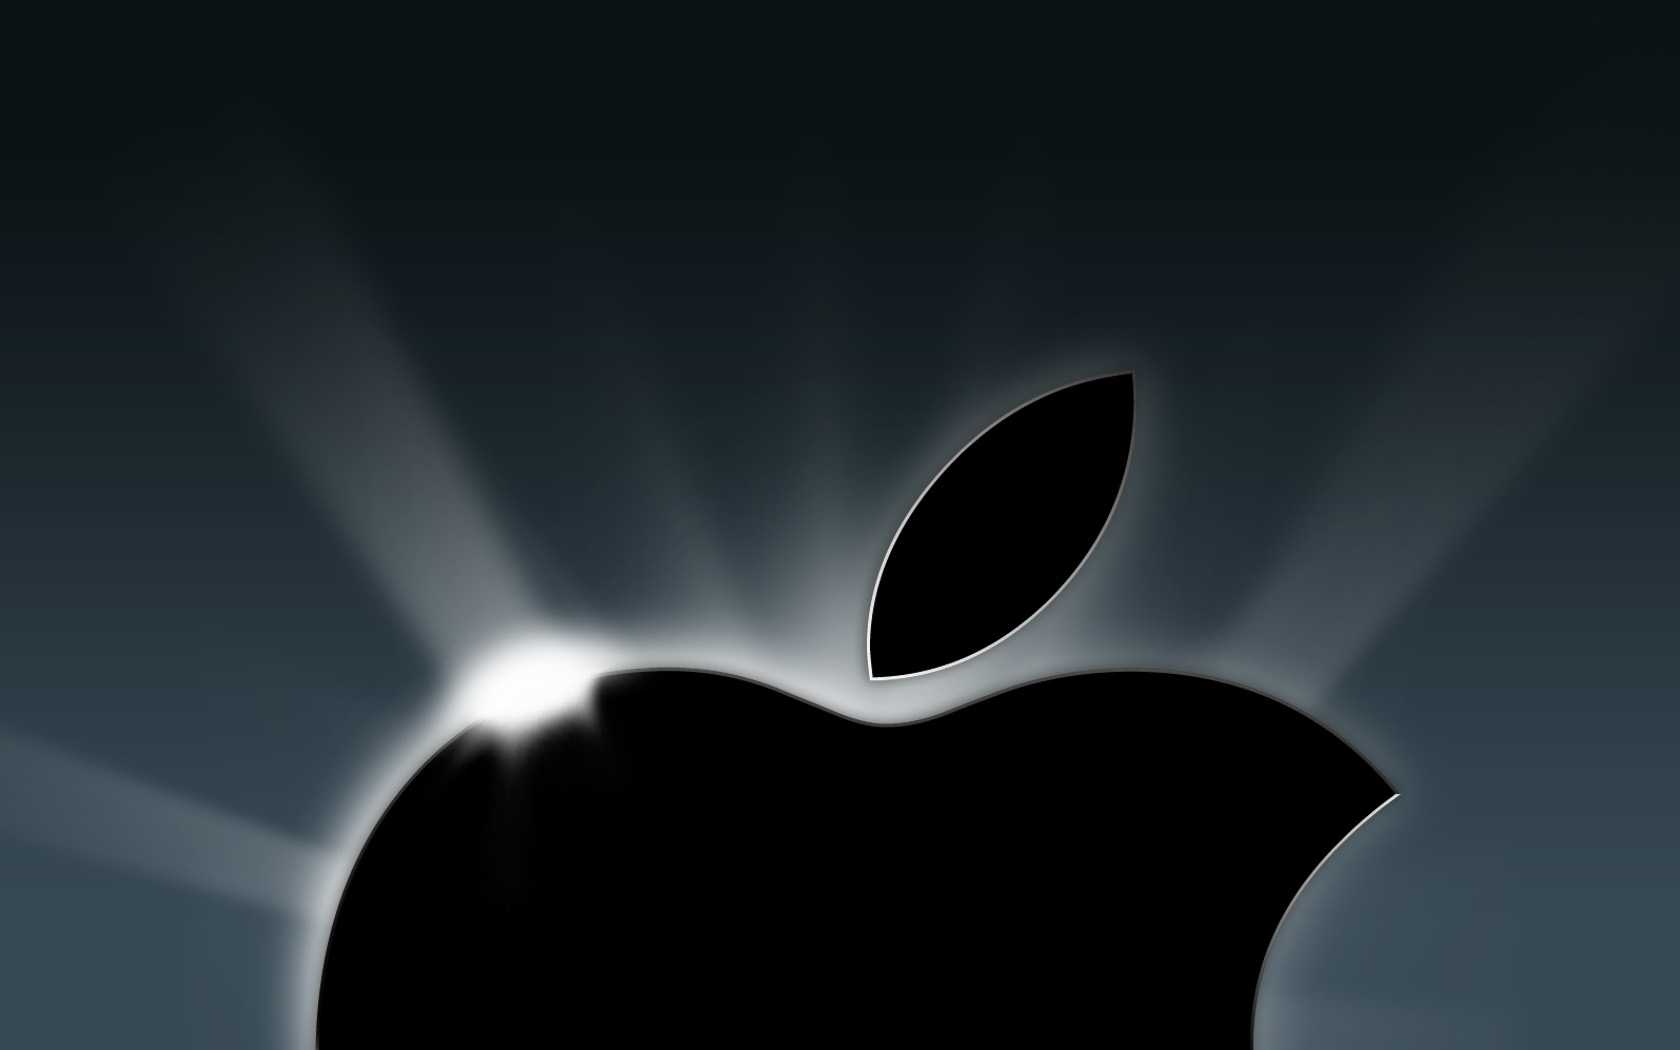 Apple ingannava i consumatori su garanzia e assistenza. Fermata dall'Antitrust